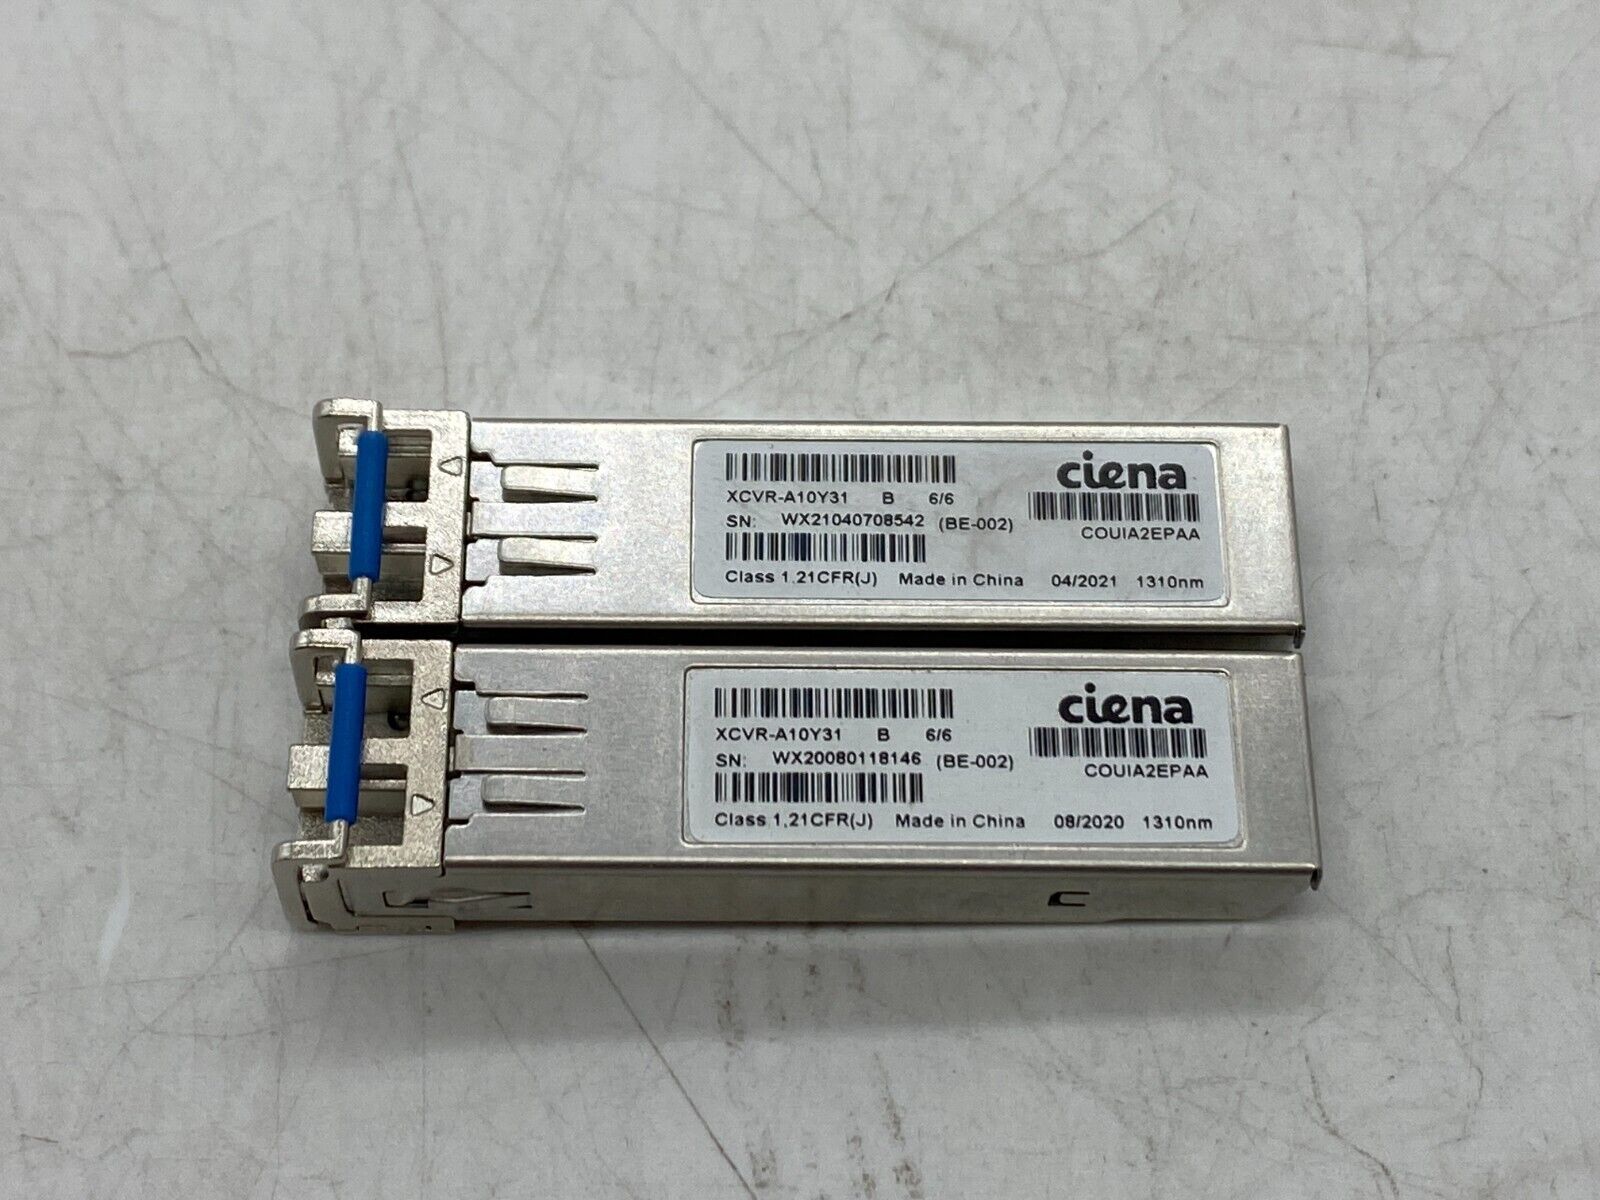 Lot of 2 Ciena XCVR-A10Y31 Gigabit 10/100/1000M SFP RJ45 Transceiver